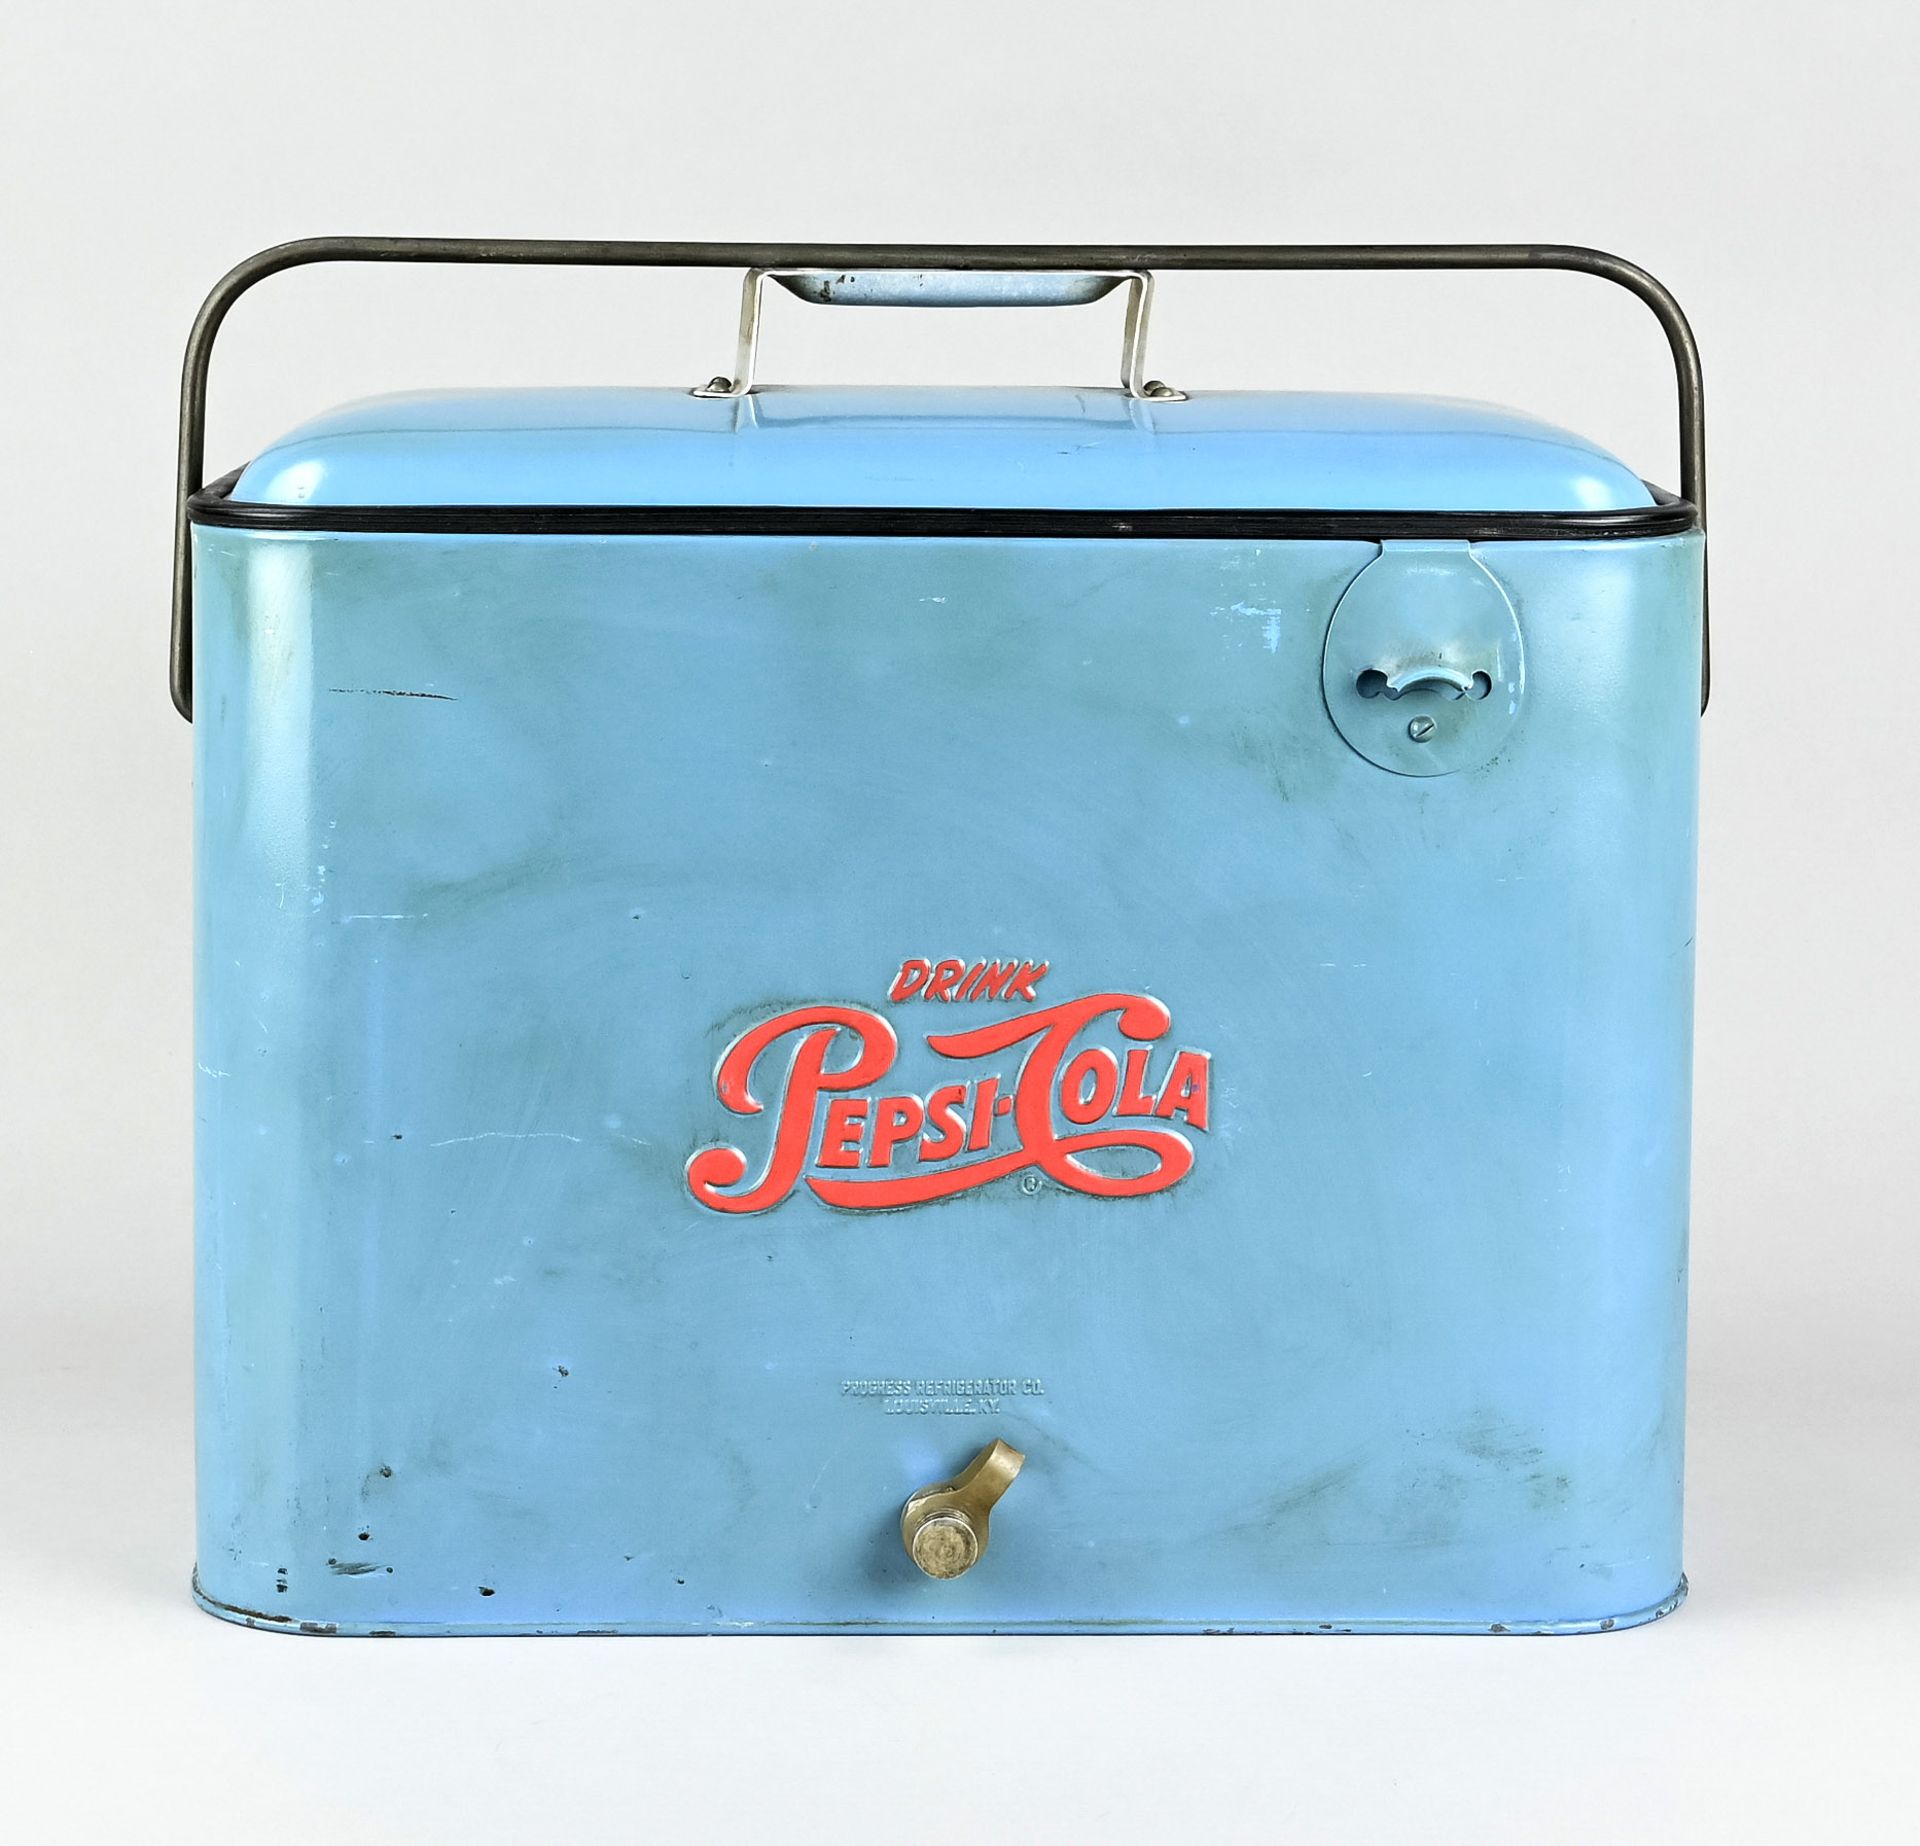 Original vintage cooler from Pepsi Cola USA circa 1930/50, Progress Refrigerator Co., Louisville. K - Image 3 of 5